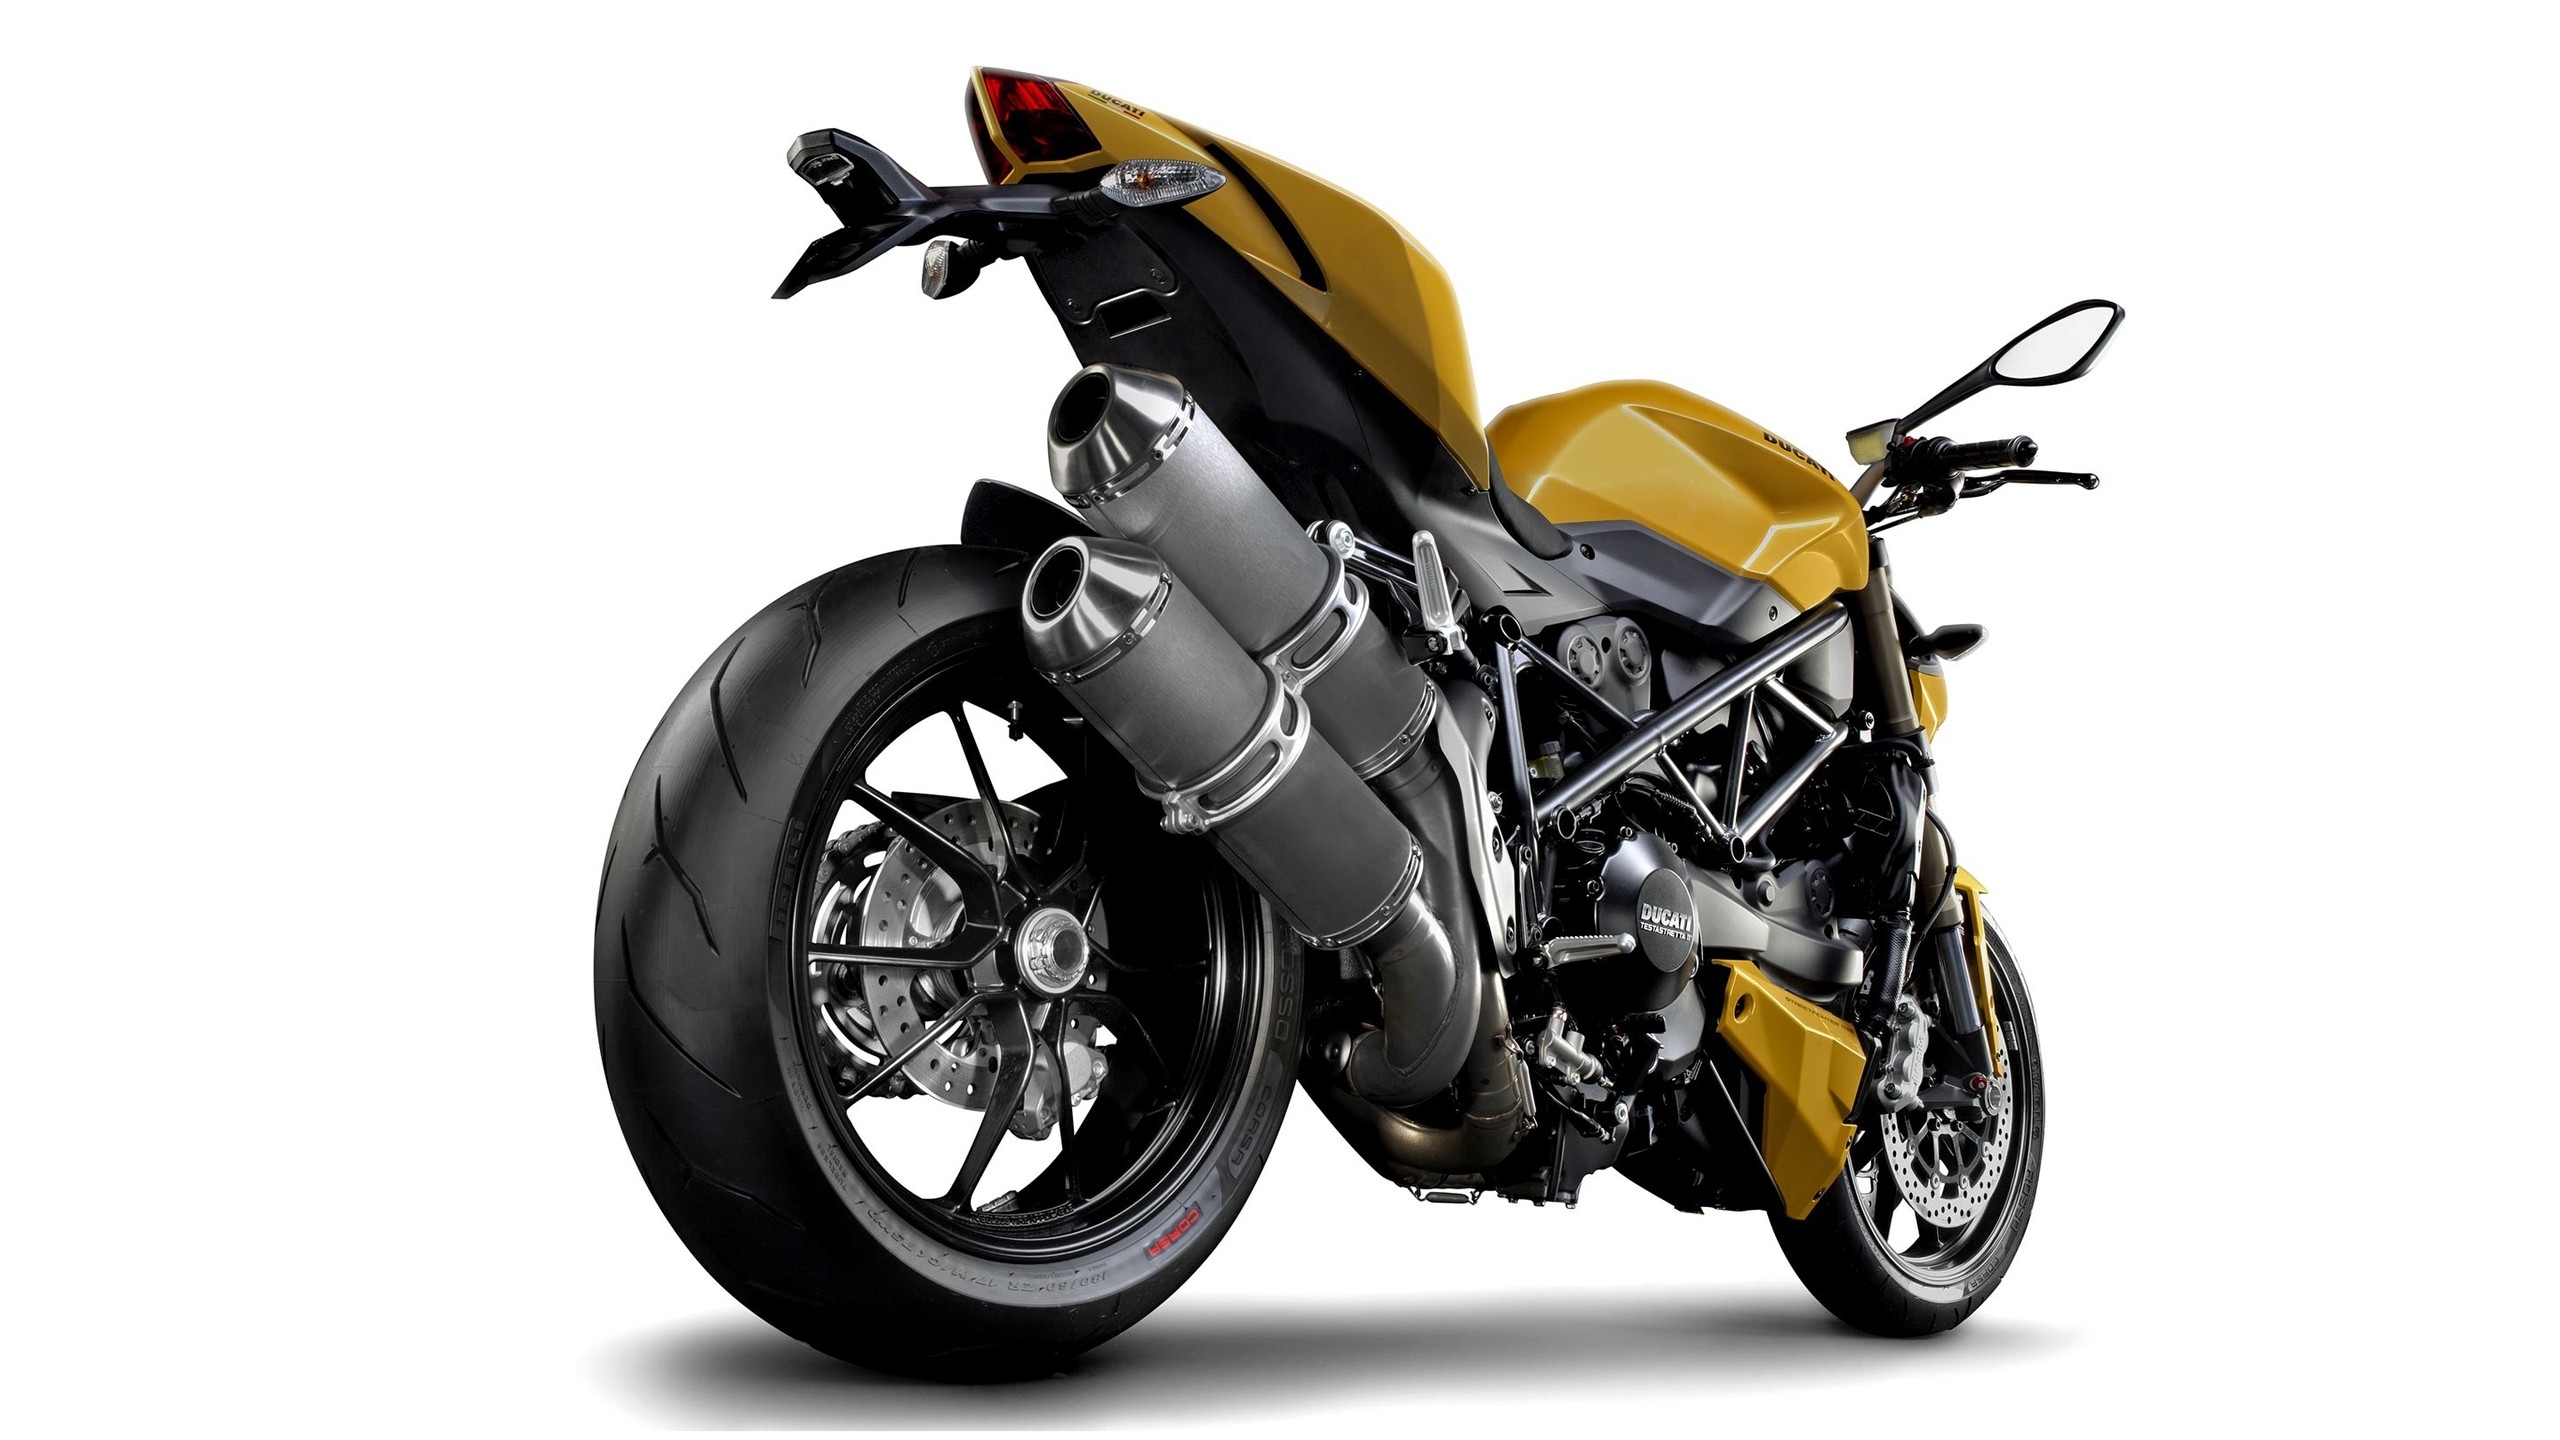  Ducati Streetfighter Rear for 2560x1440 HDTV resolution